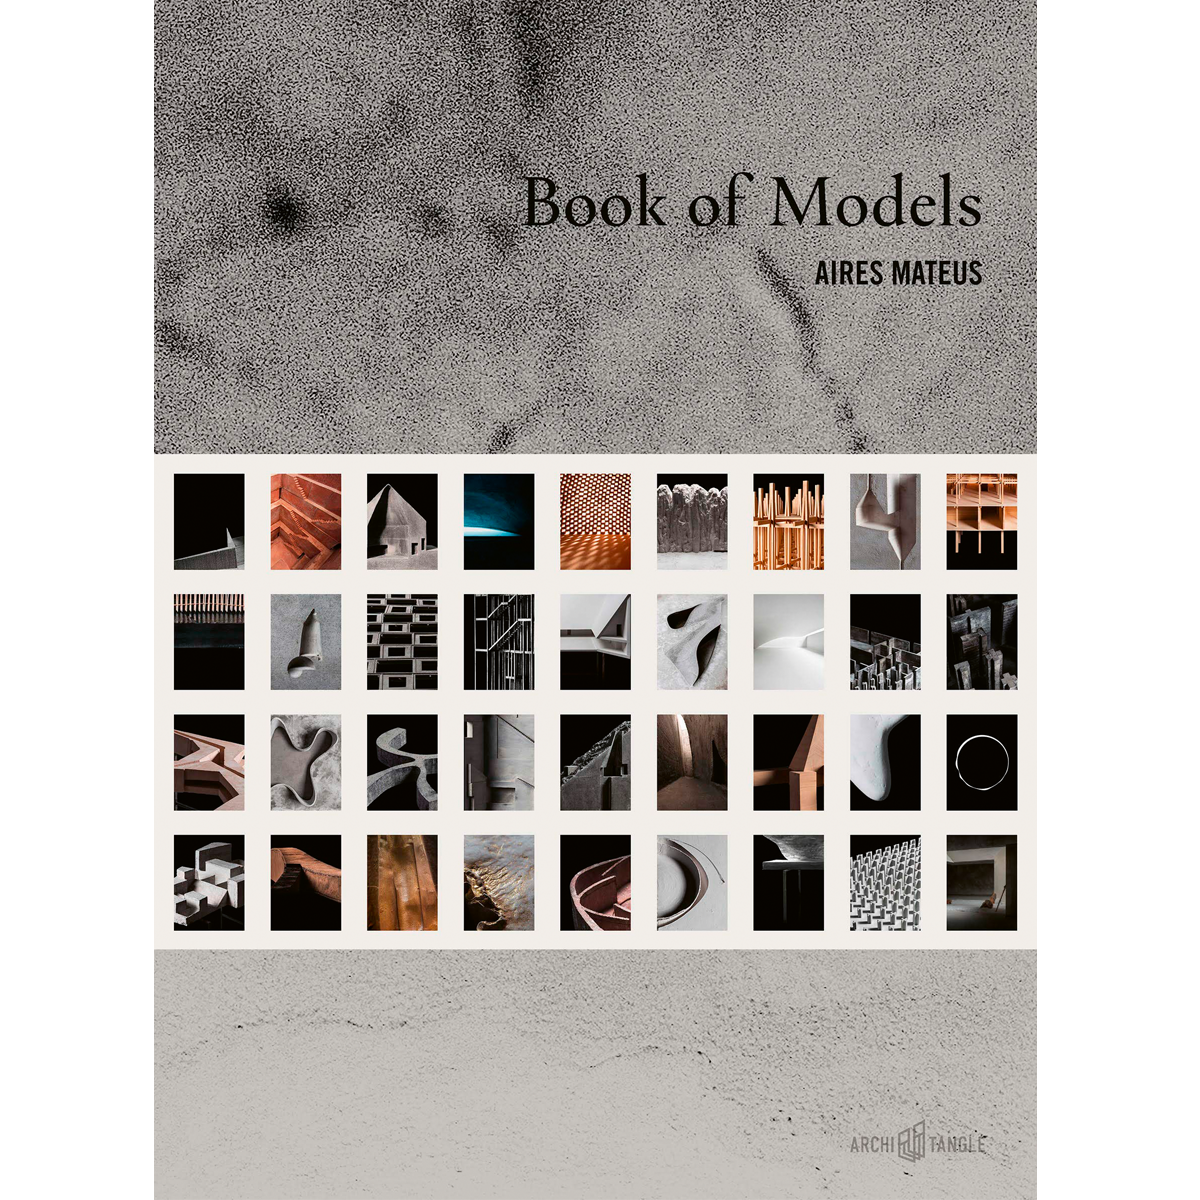 Aires Mateus: Book of Models